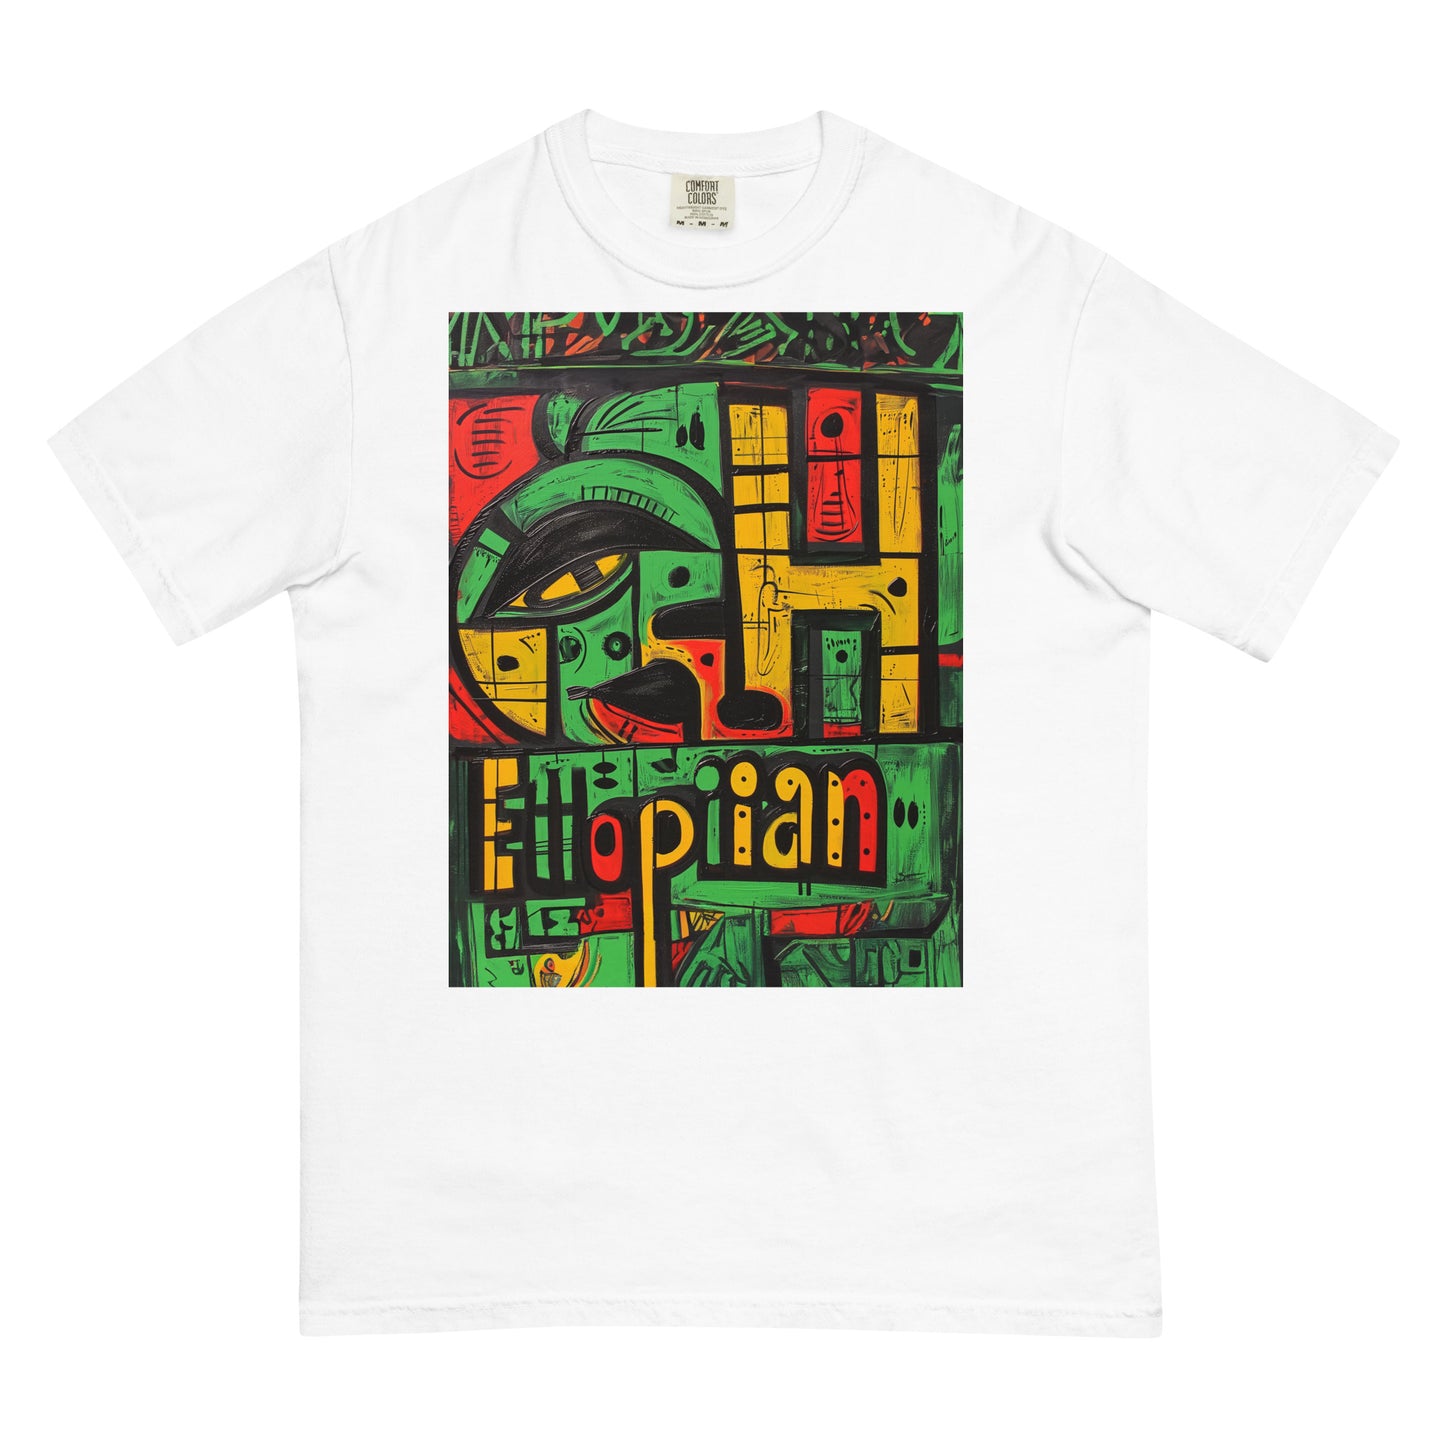 ETHIOPIAN - garment-dyed heavyweight t-shirt